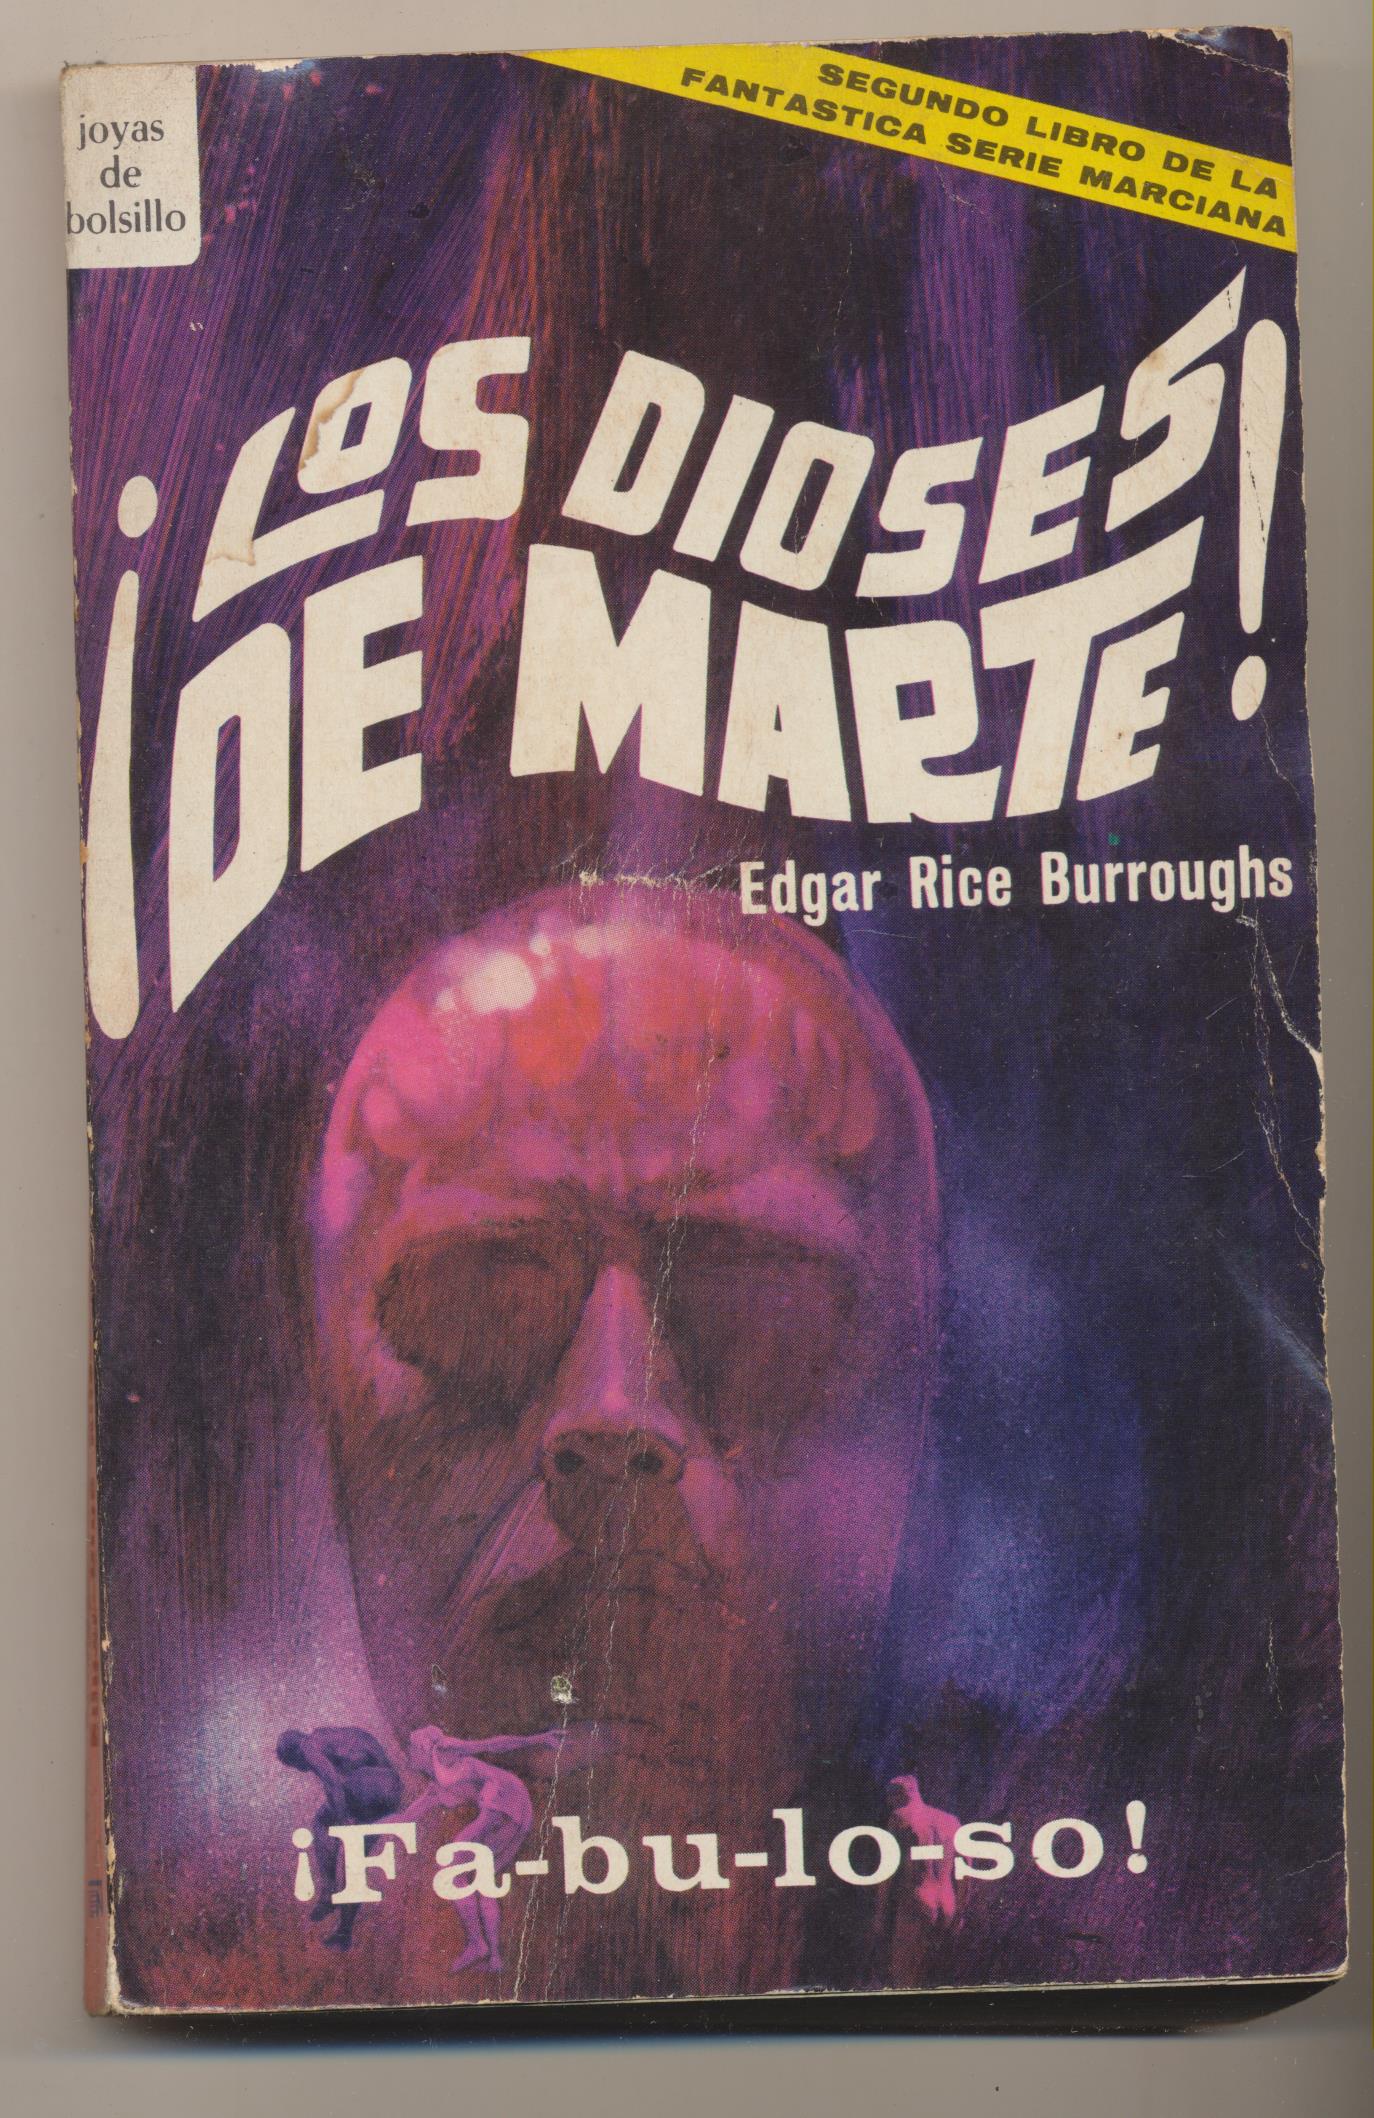 Edgar Rice Burroughs. Los dioses de marte. 1º Edición Novaro 1969